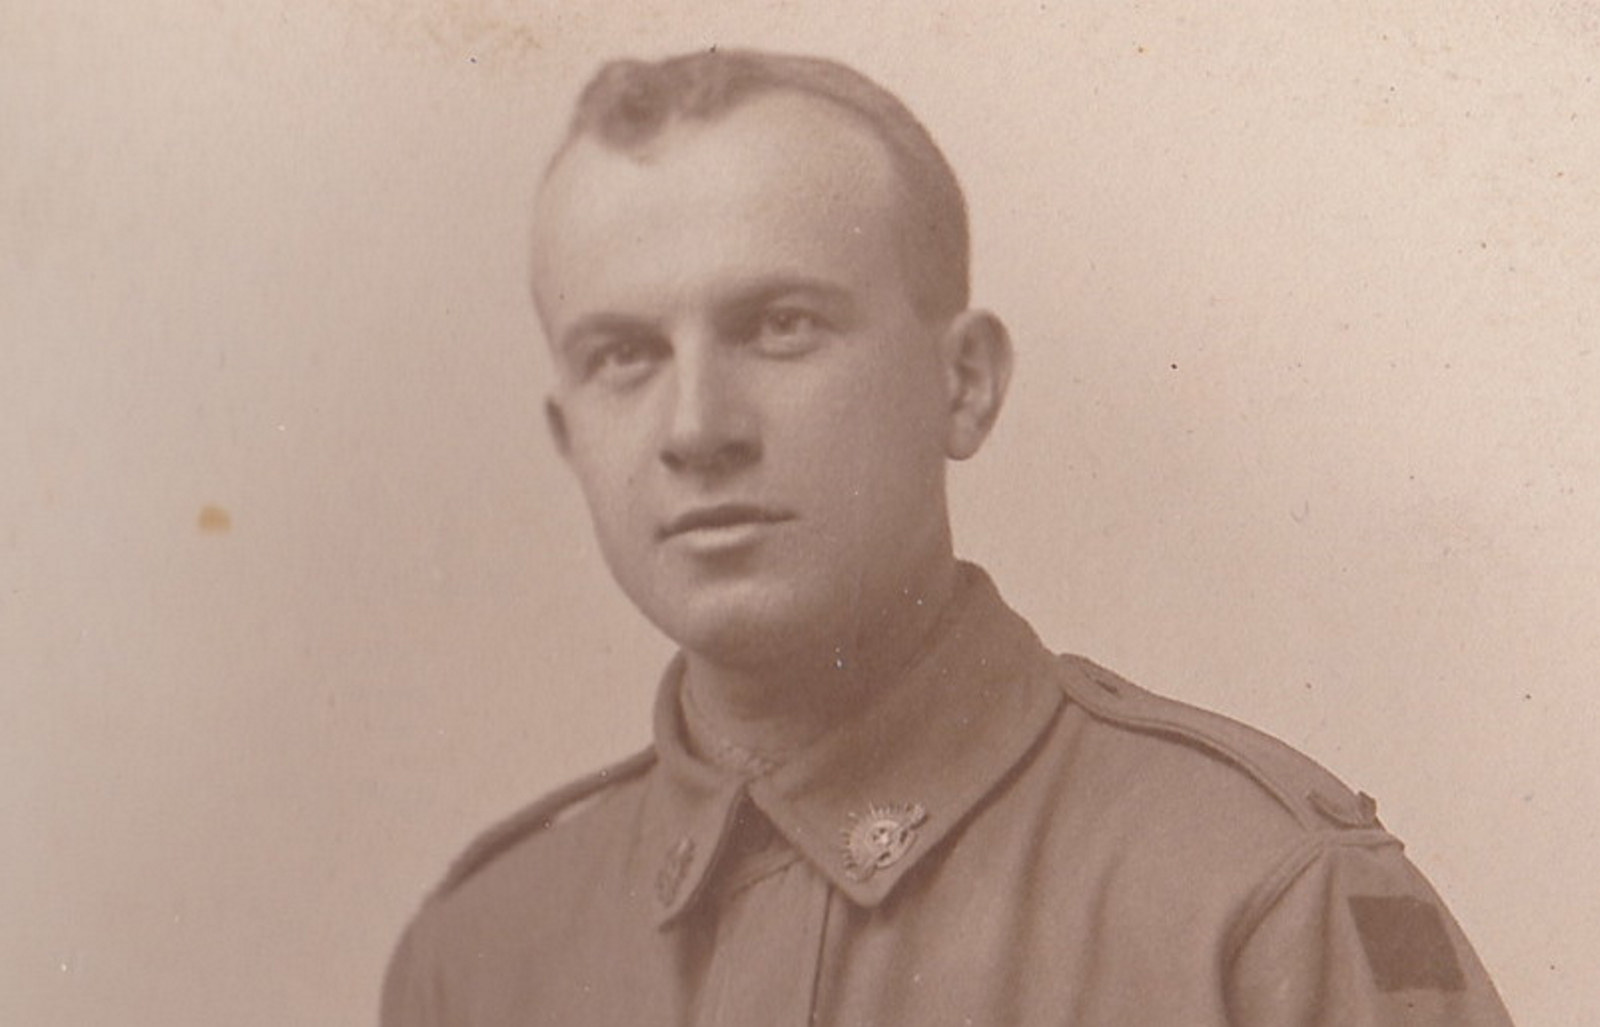 Closeup of man in uniform.